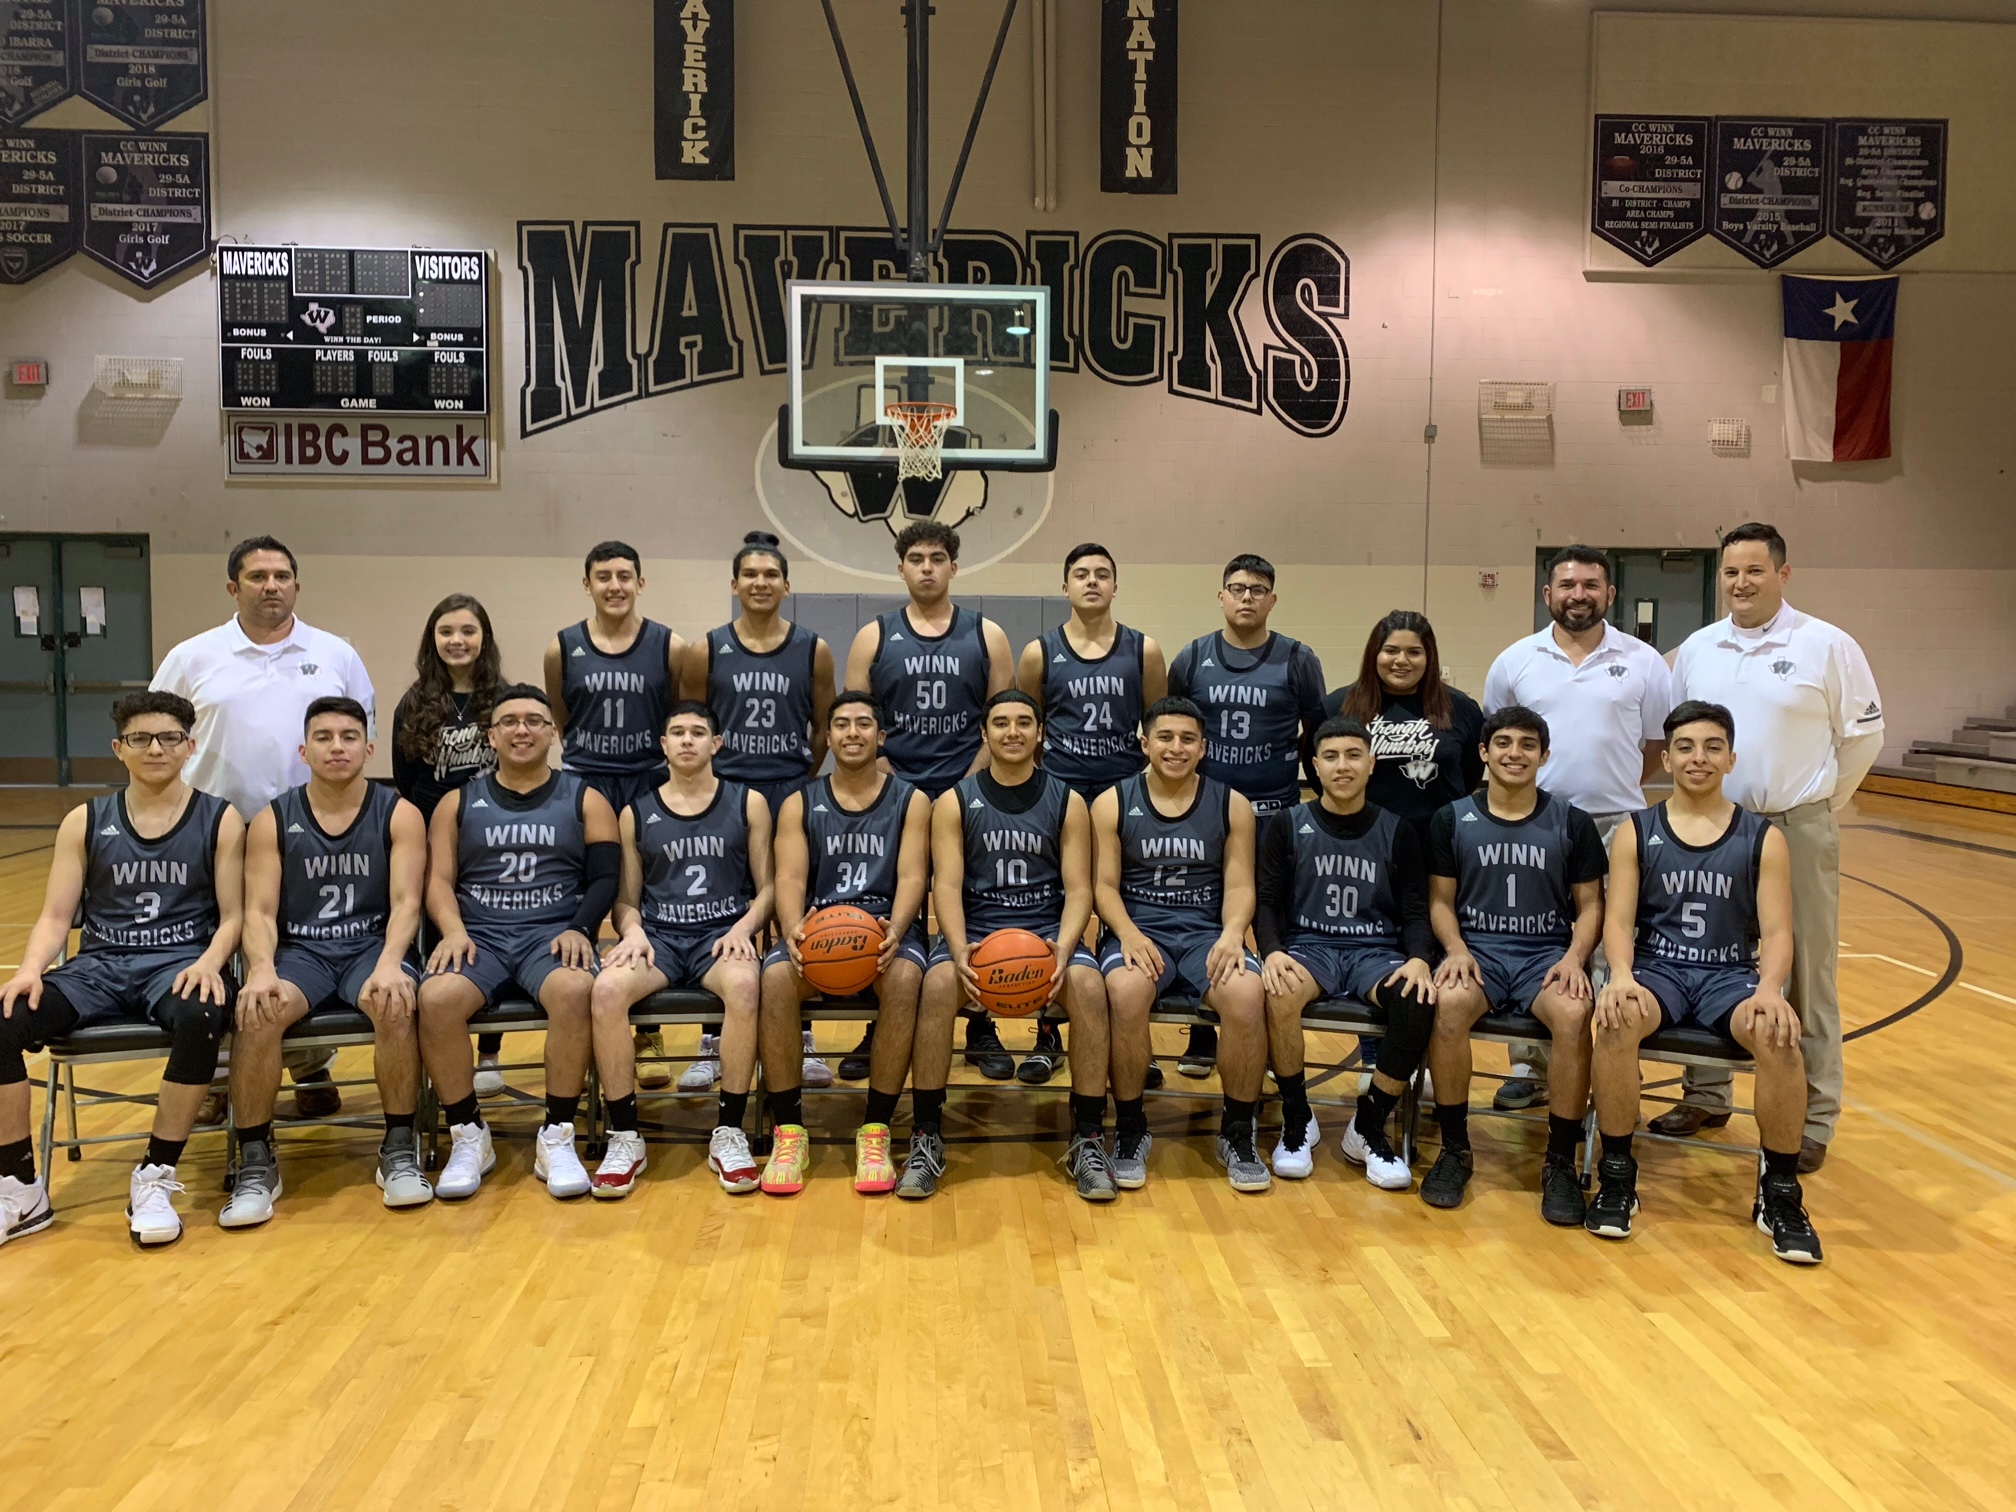 2019 maverick varsity basketball team.jpg